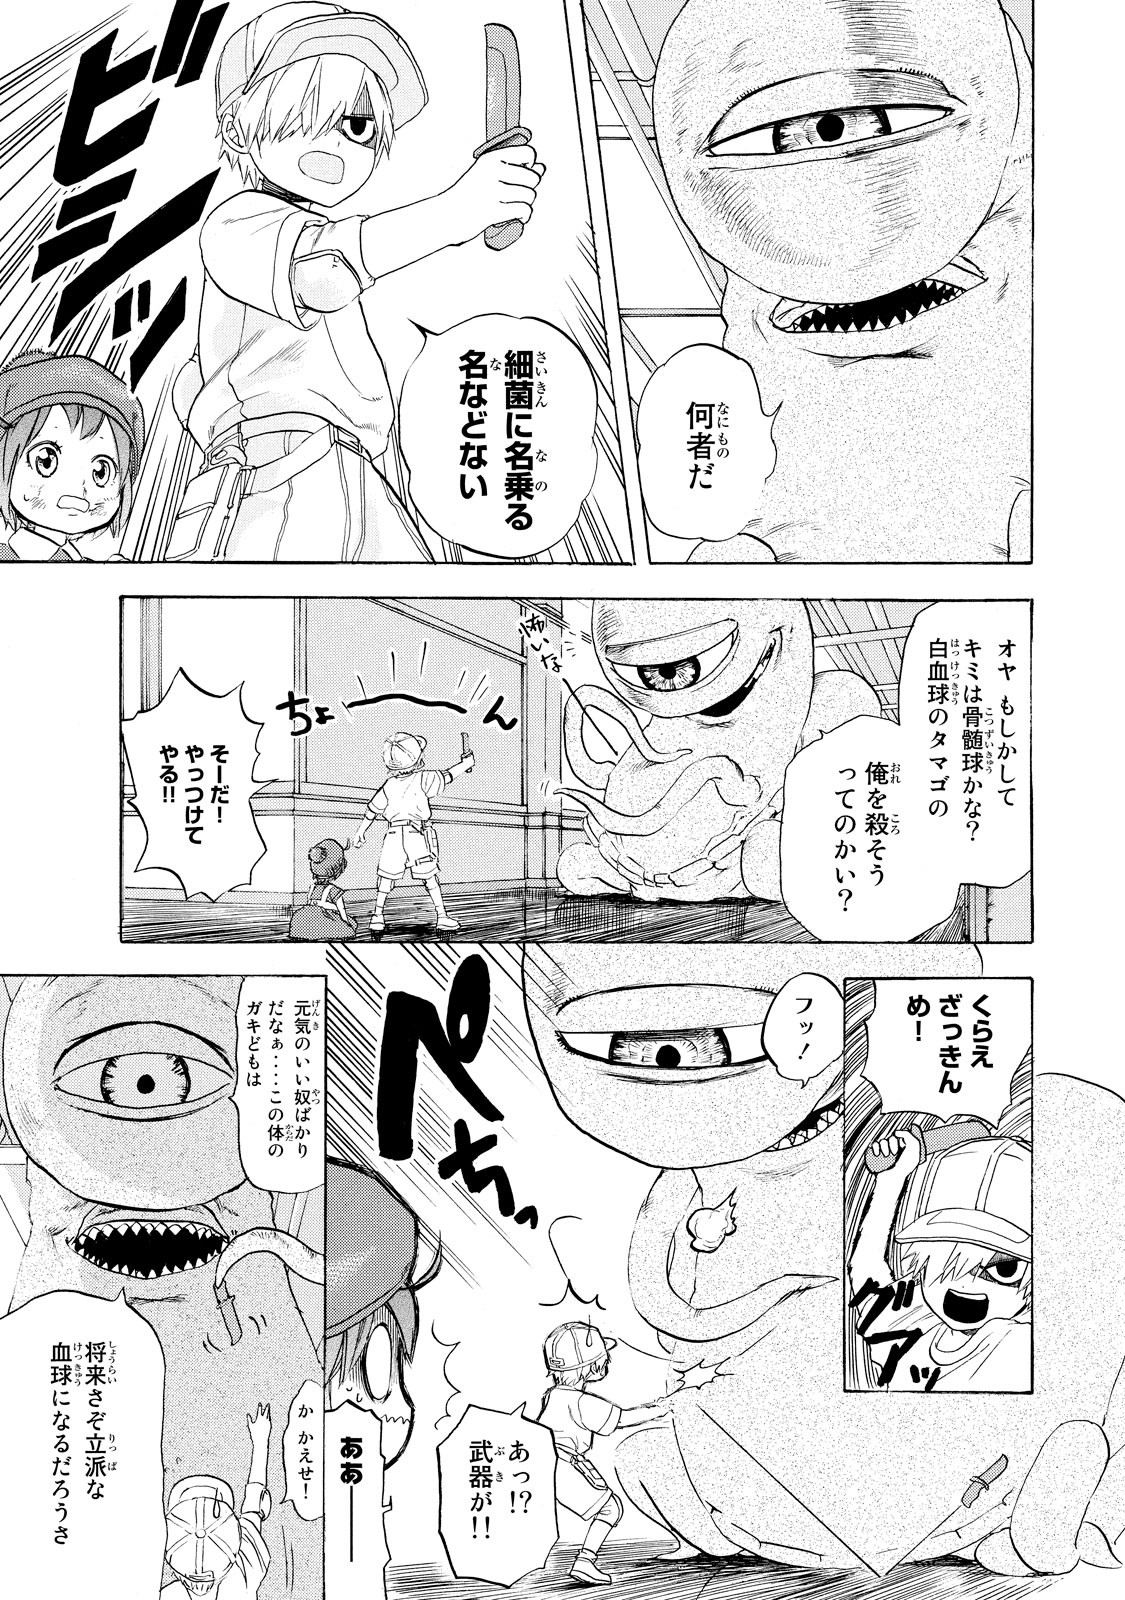 Hataraku Saibou - Chapter 7 - Page 22